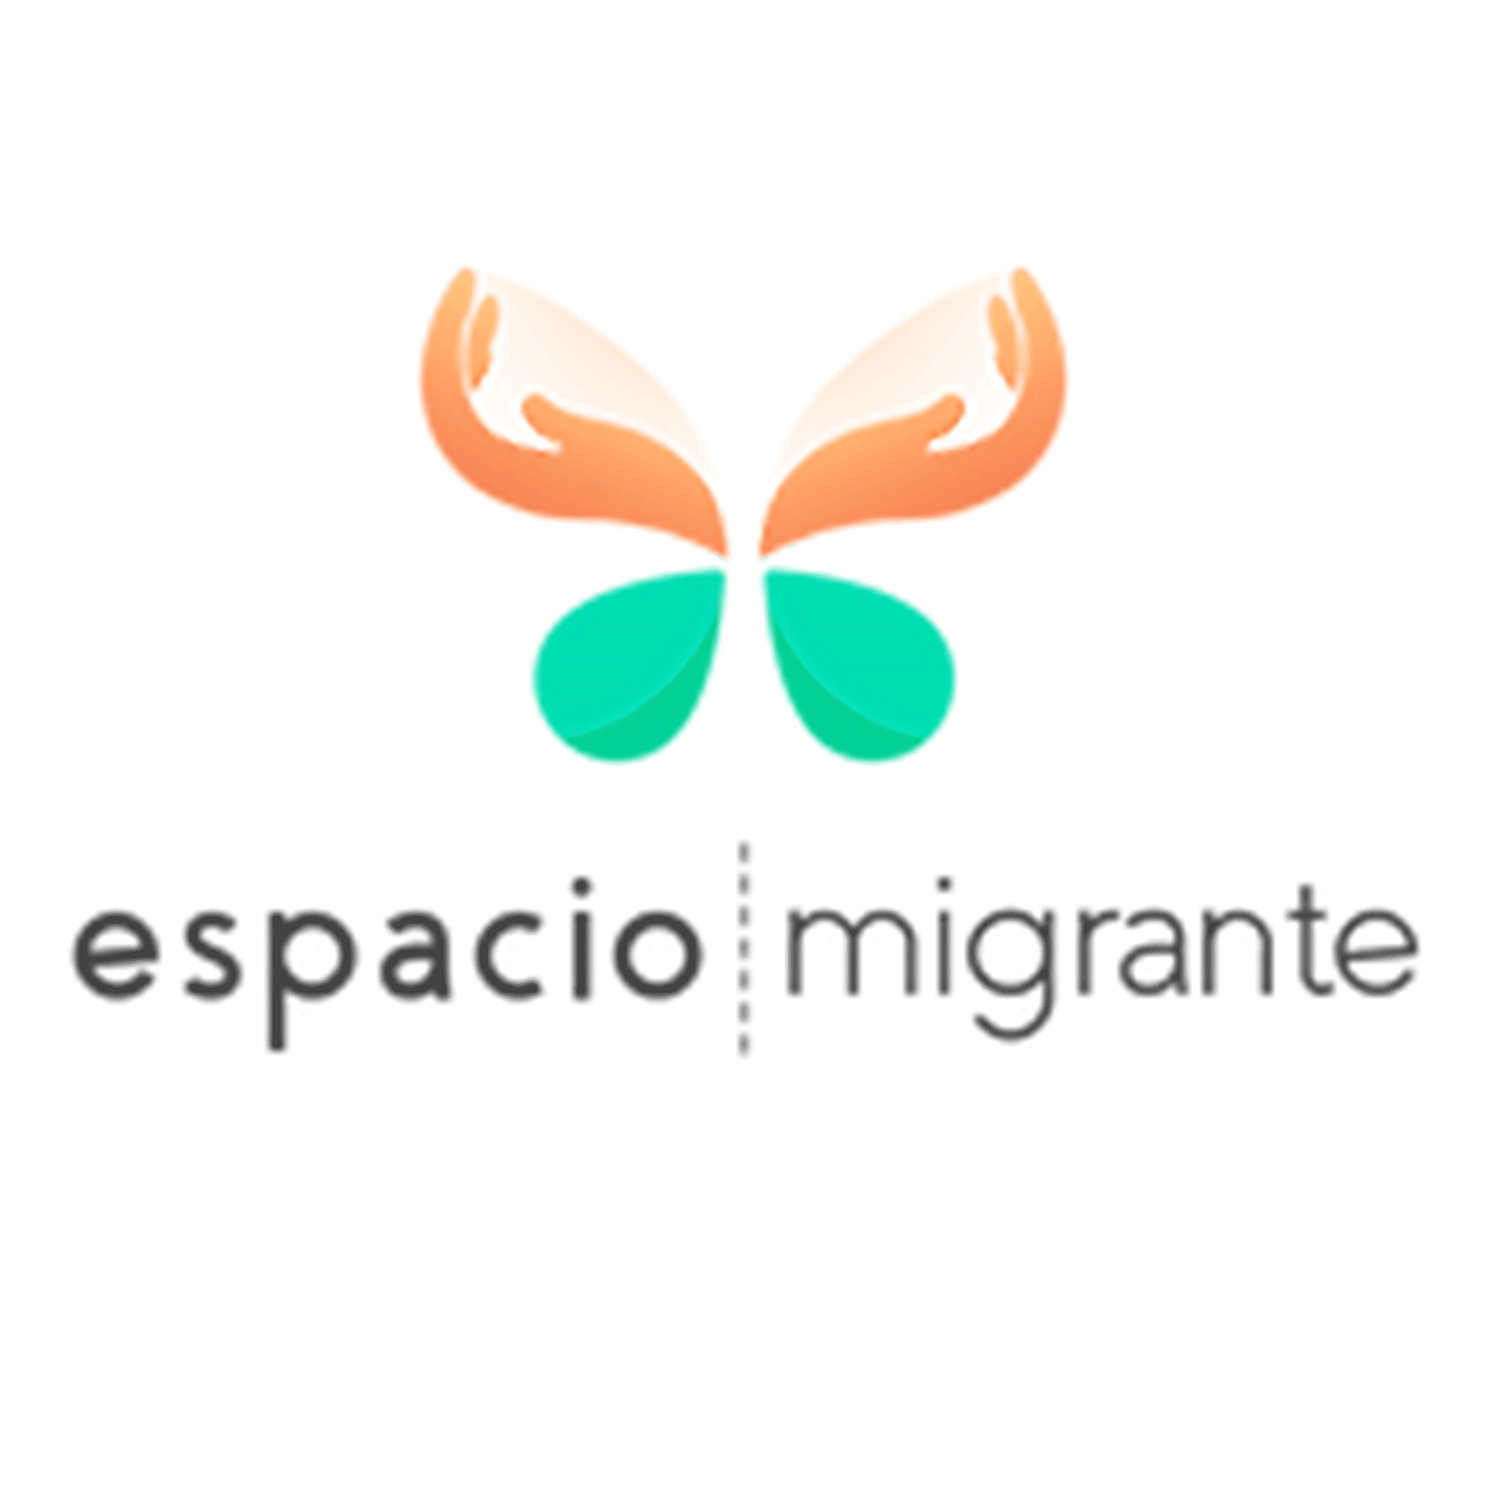 Migrant Human Rights 🇲🇽 Espacio Migrante ☮️ Sarah Soto and Jessica Valcin